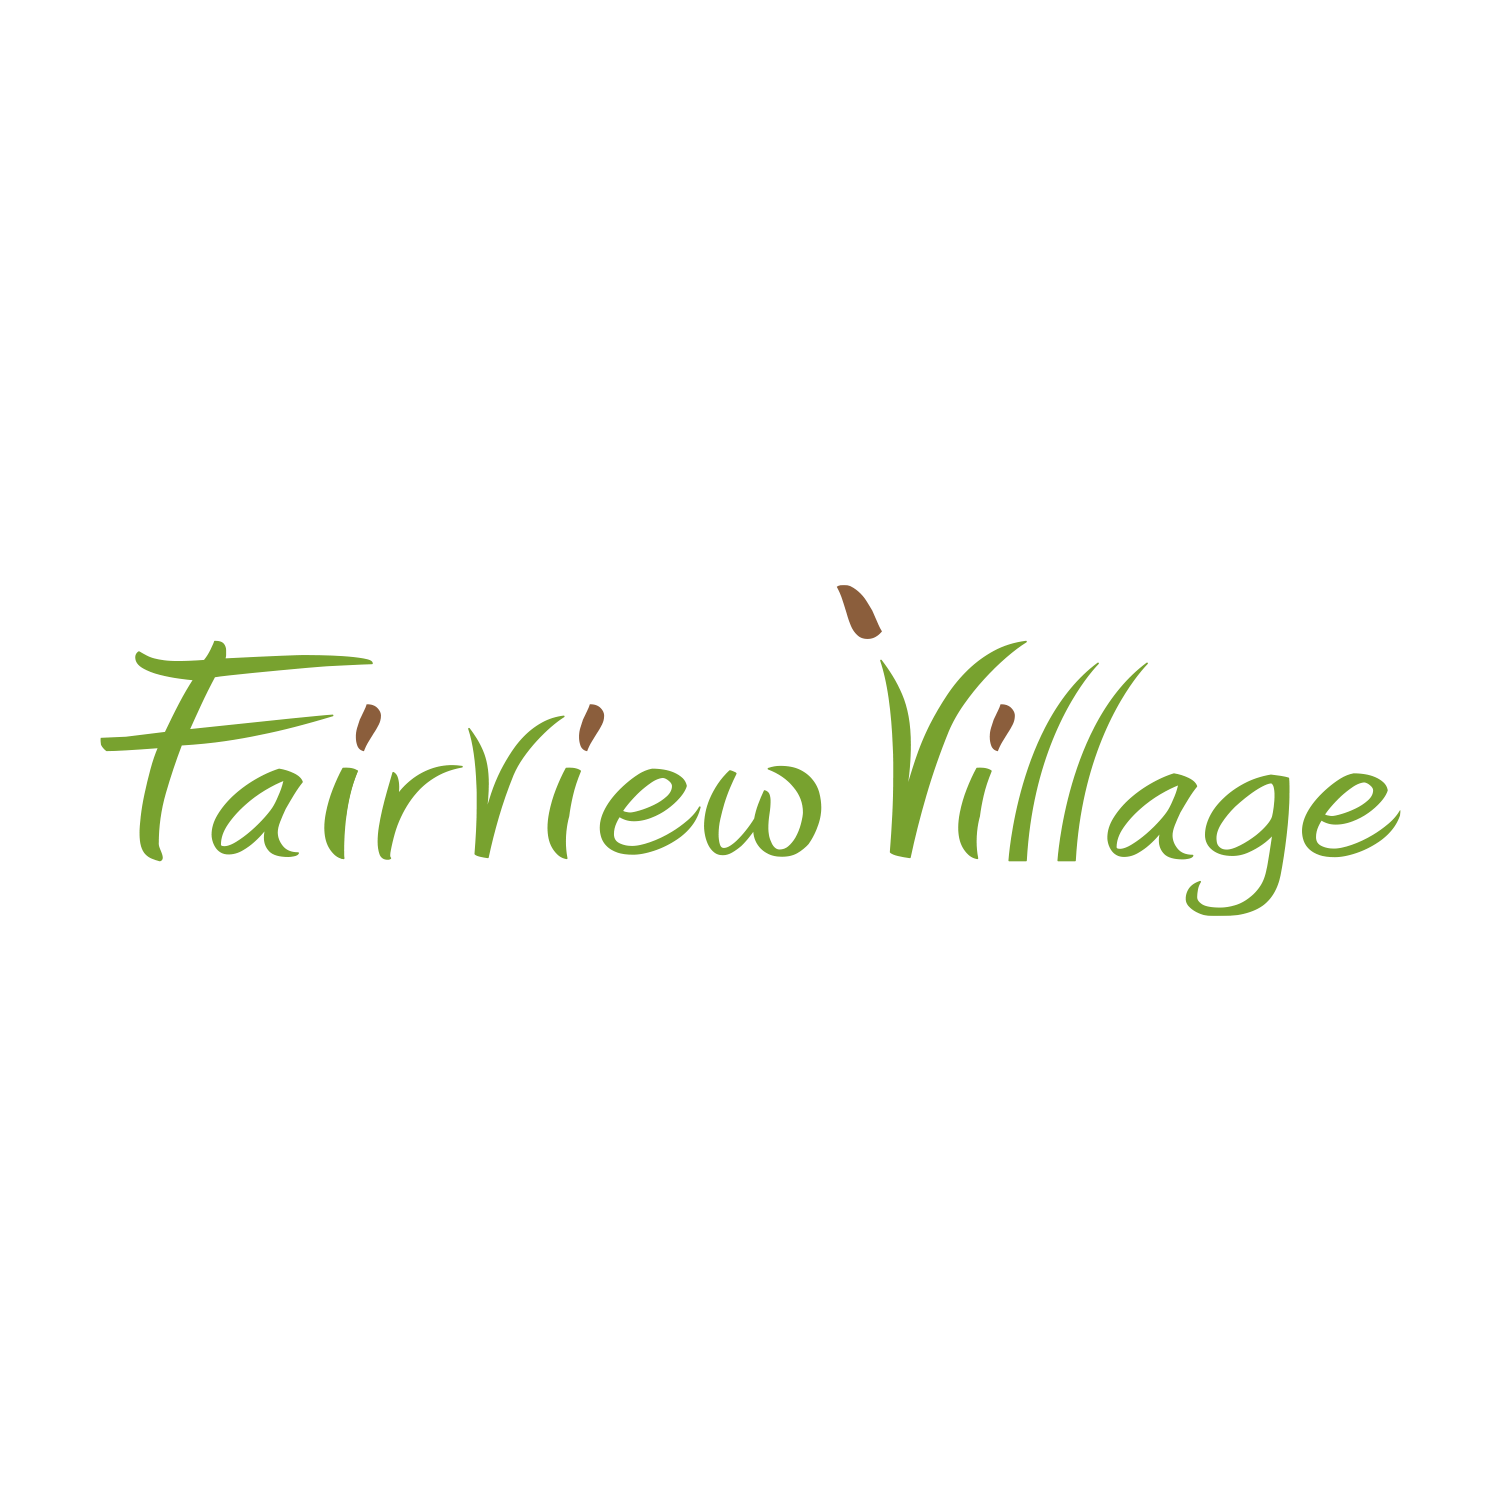 Fairview Village Logo Design - Windsor, CO  Real Estate Development